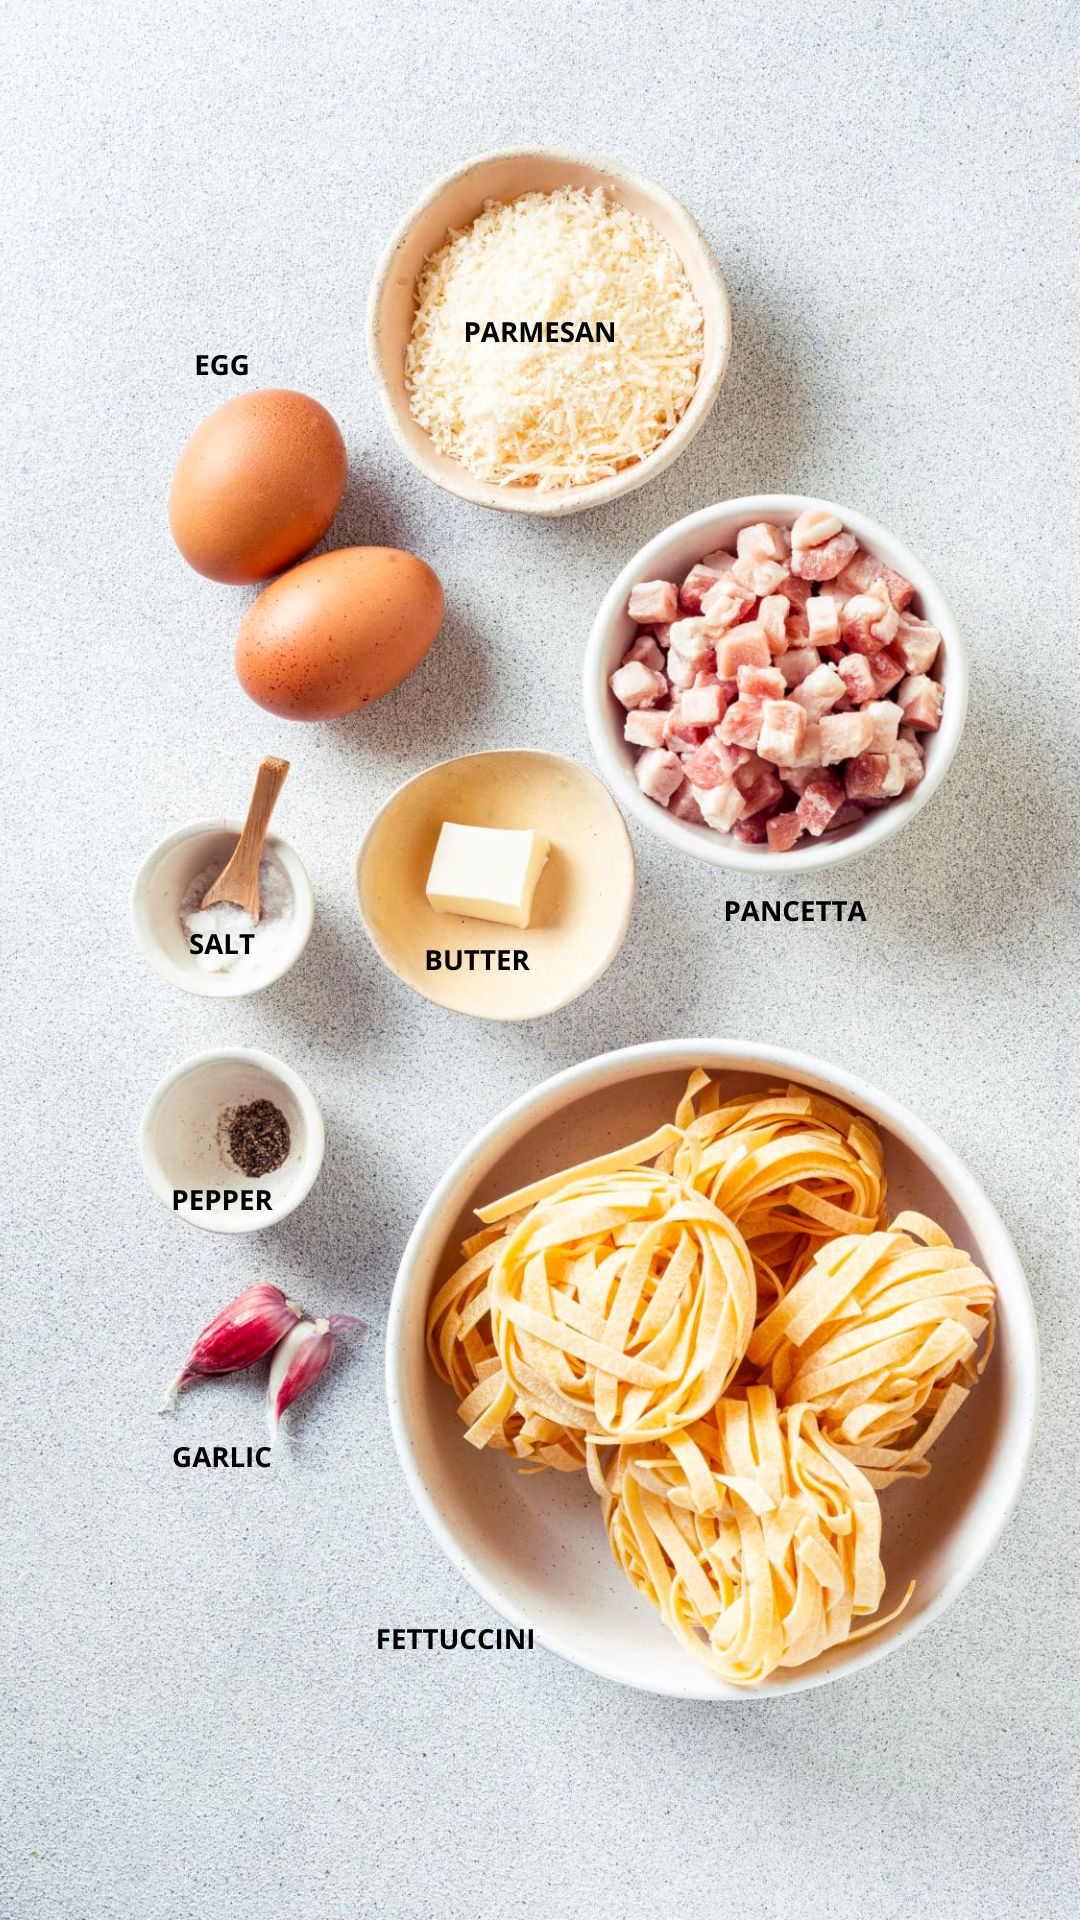 Pasta Carbonara with pancetta ingredients- Pasta, eggs, salt, pepper, butter, pancetta, parmesan, and garlic.